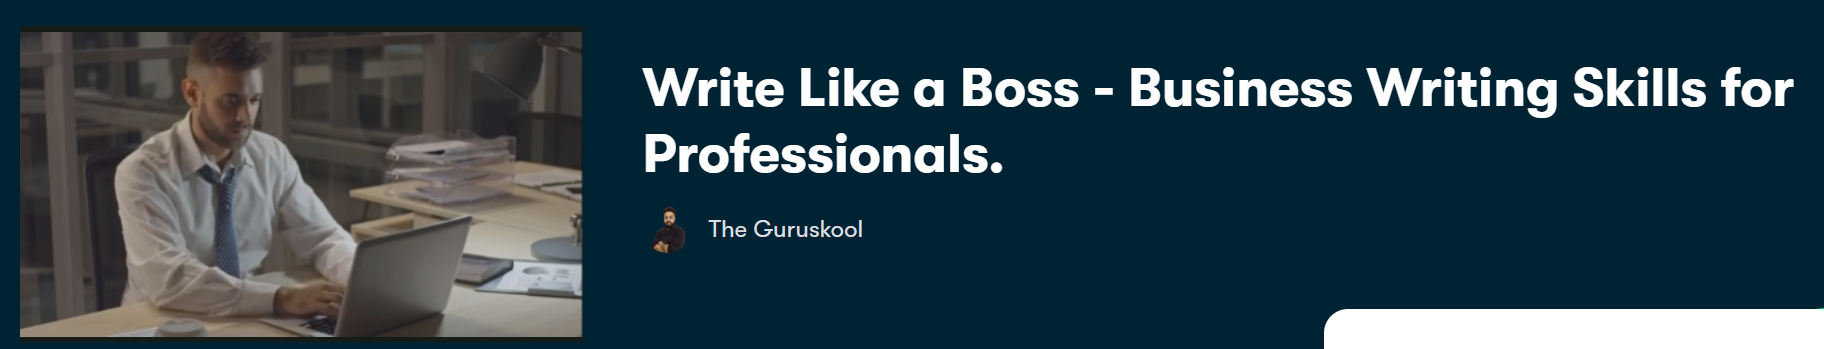 Write Like a Boss - Business Writing Skills for Professionals (Skillshare)